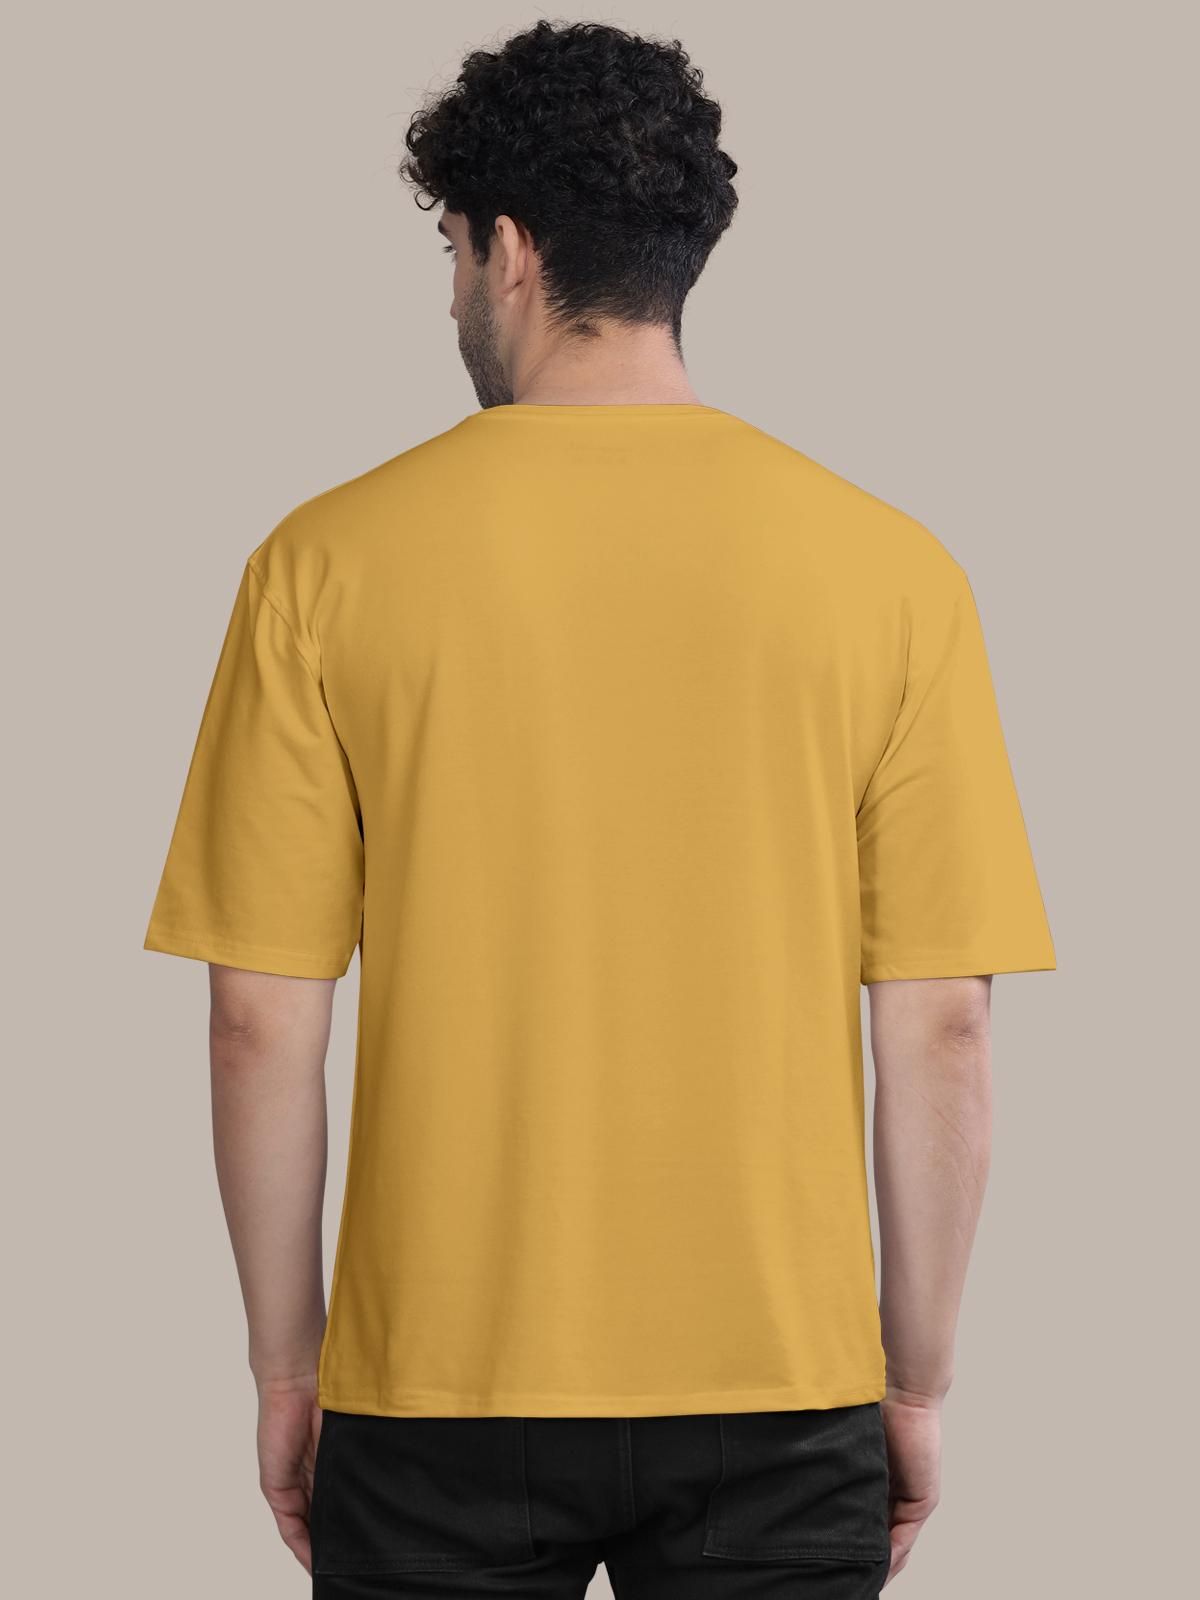 Trendy Cotton Blend Graphic Print Oversized T-Shirt for Men's